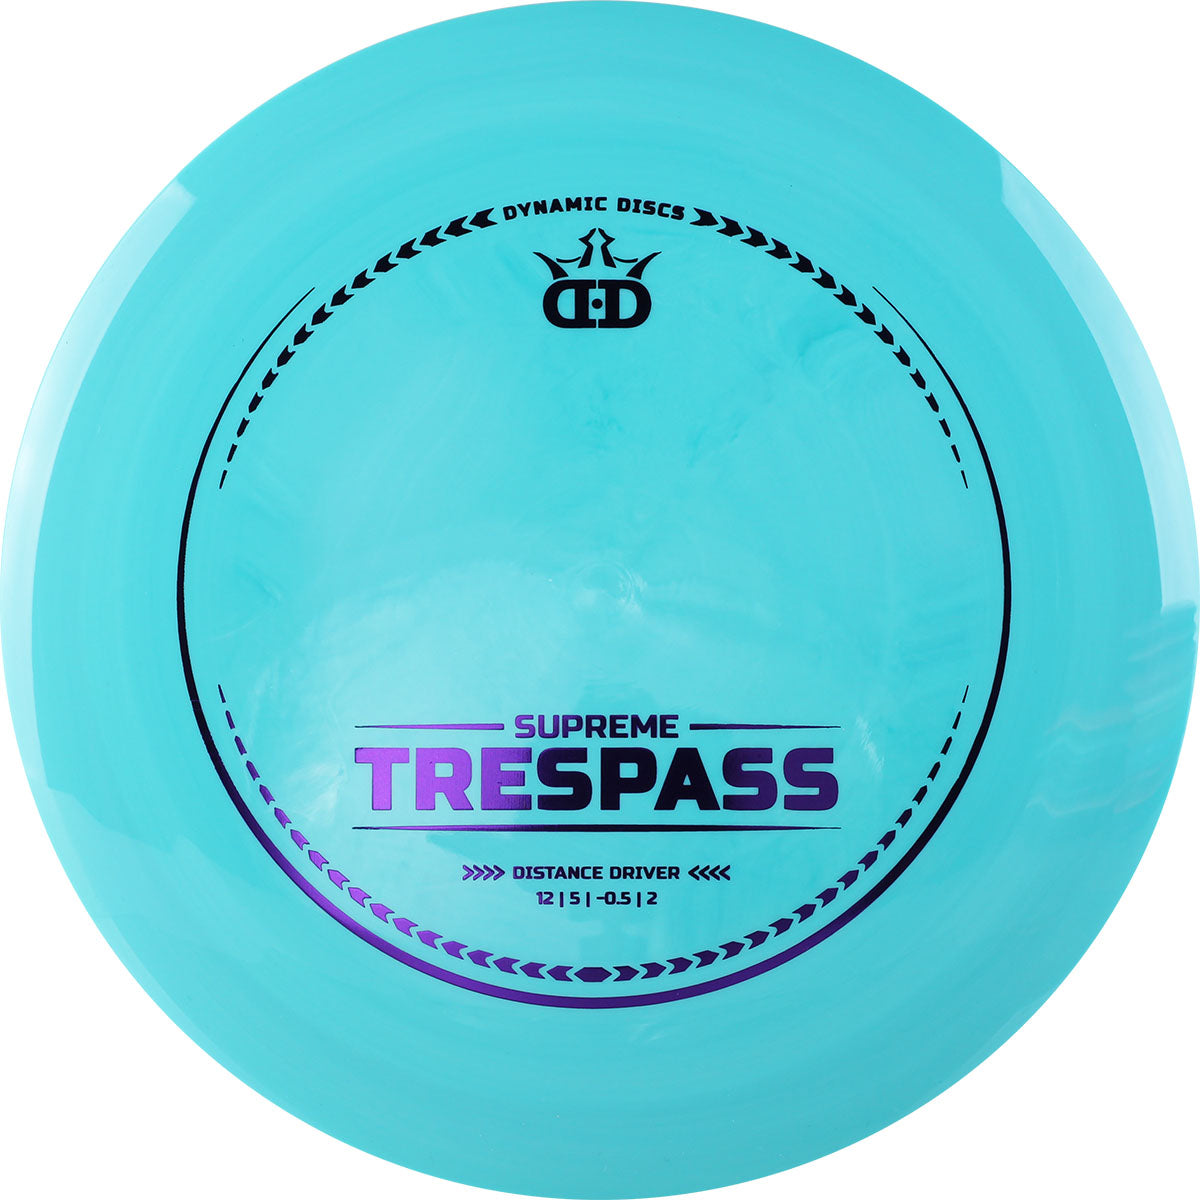 Dynamic Discs Trespass - Supreme